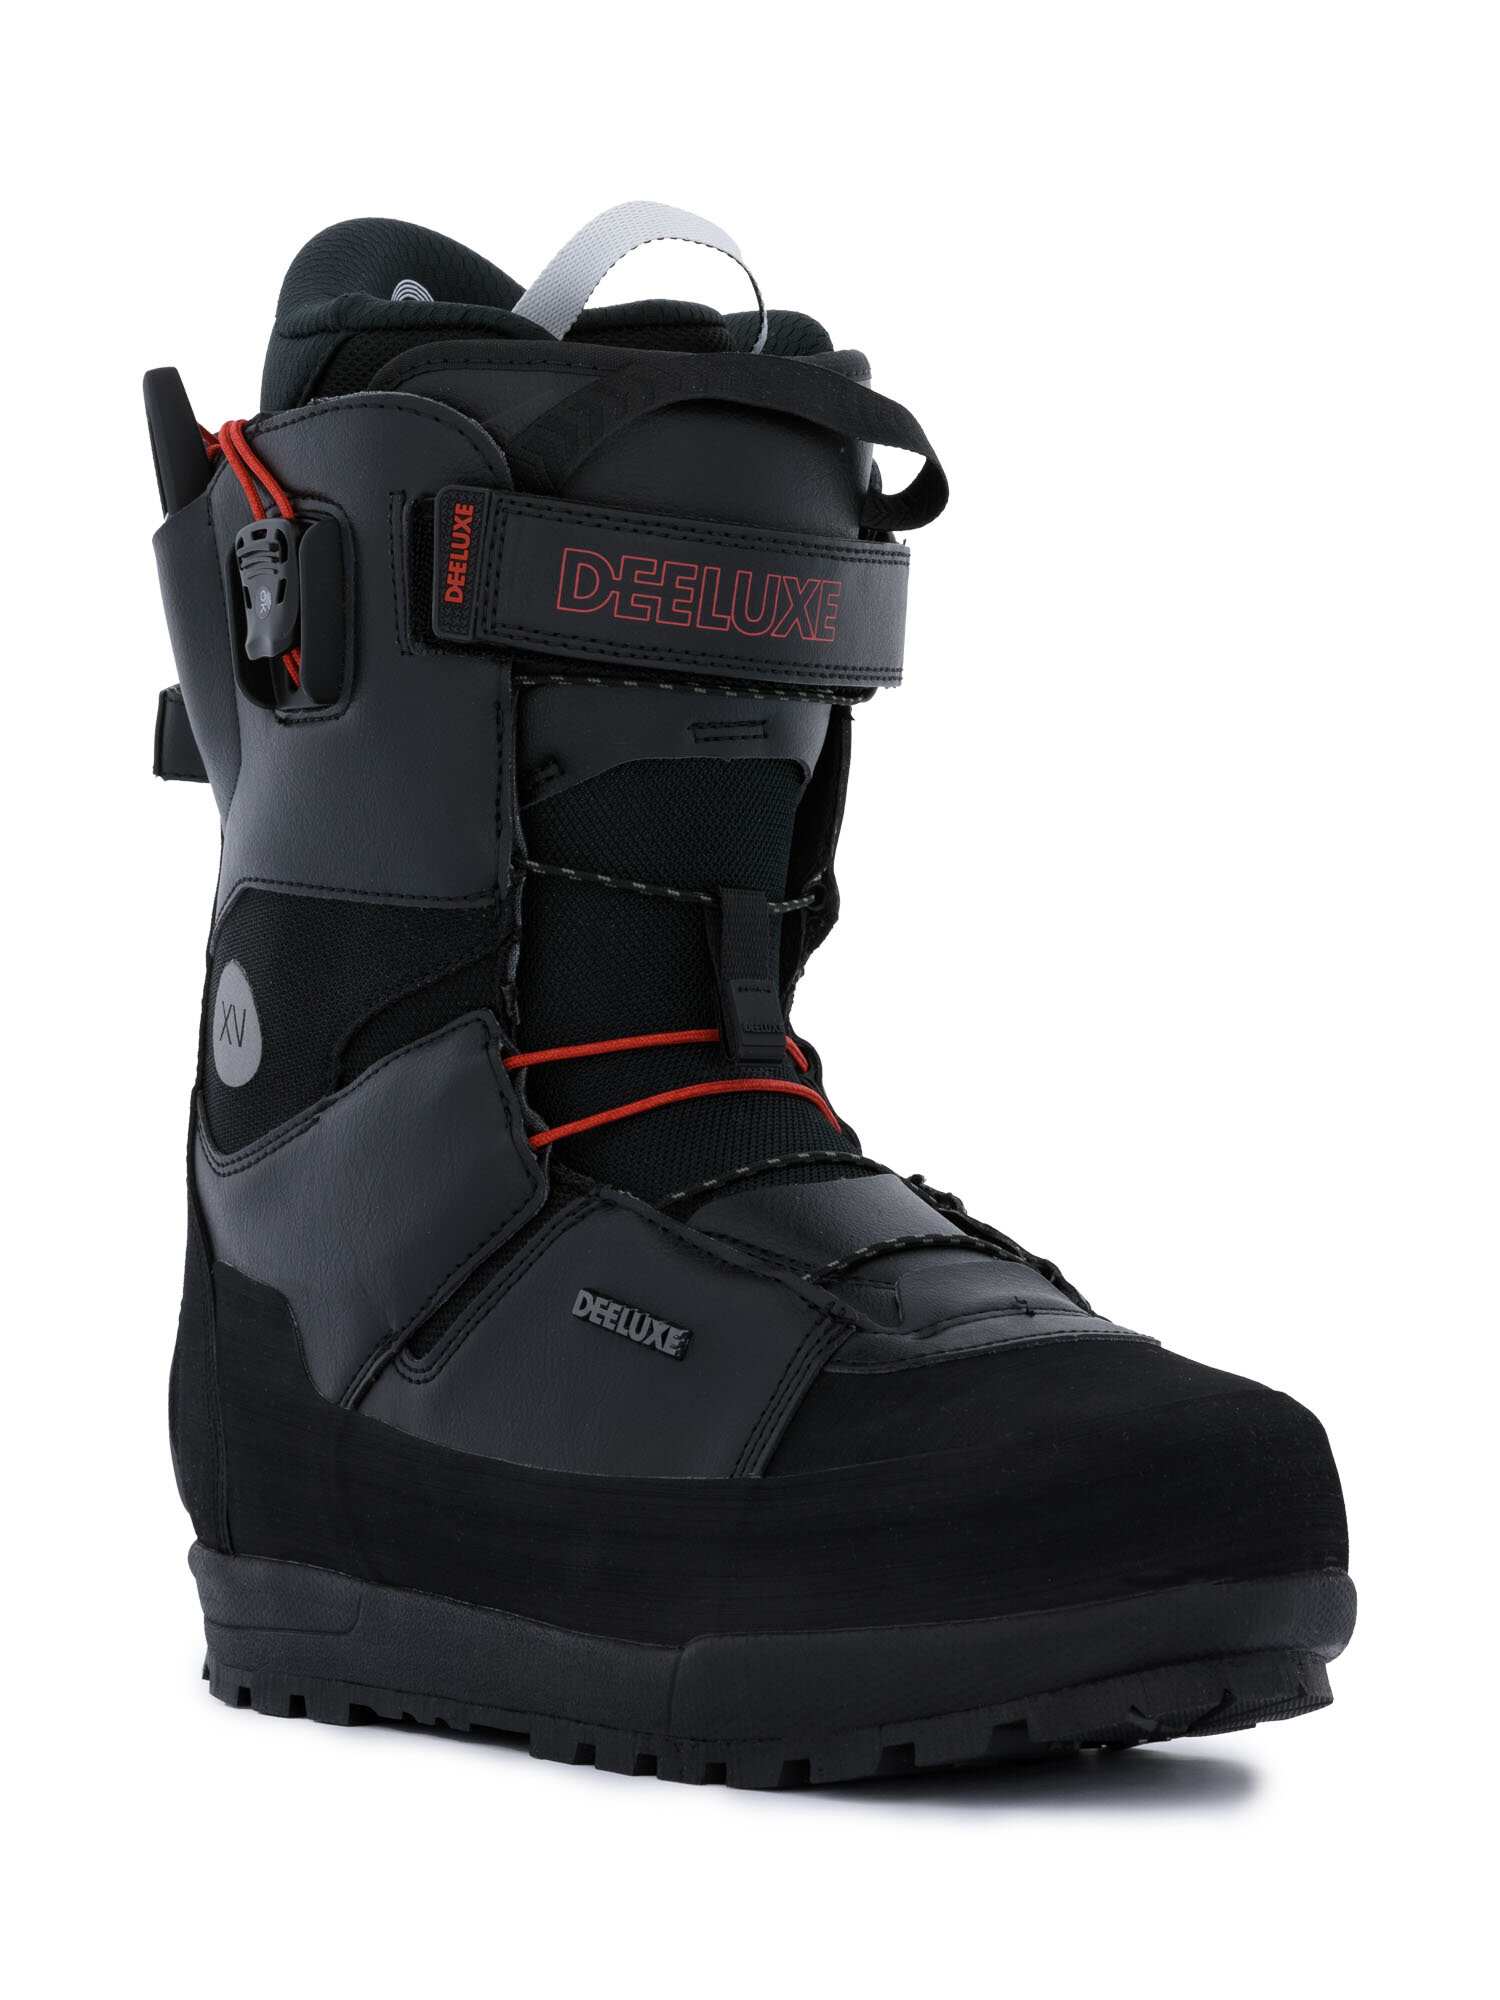 Ботинки для сноуборда DEELUXE Spark XV Black (см:285)